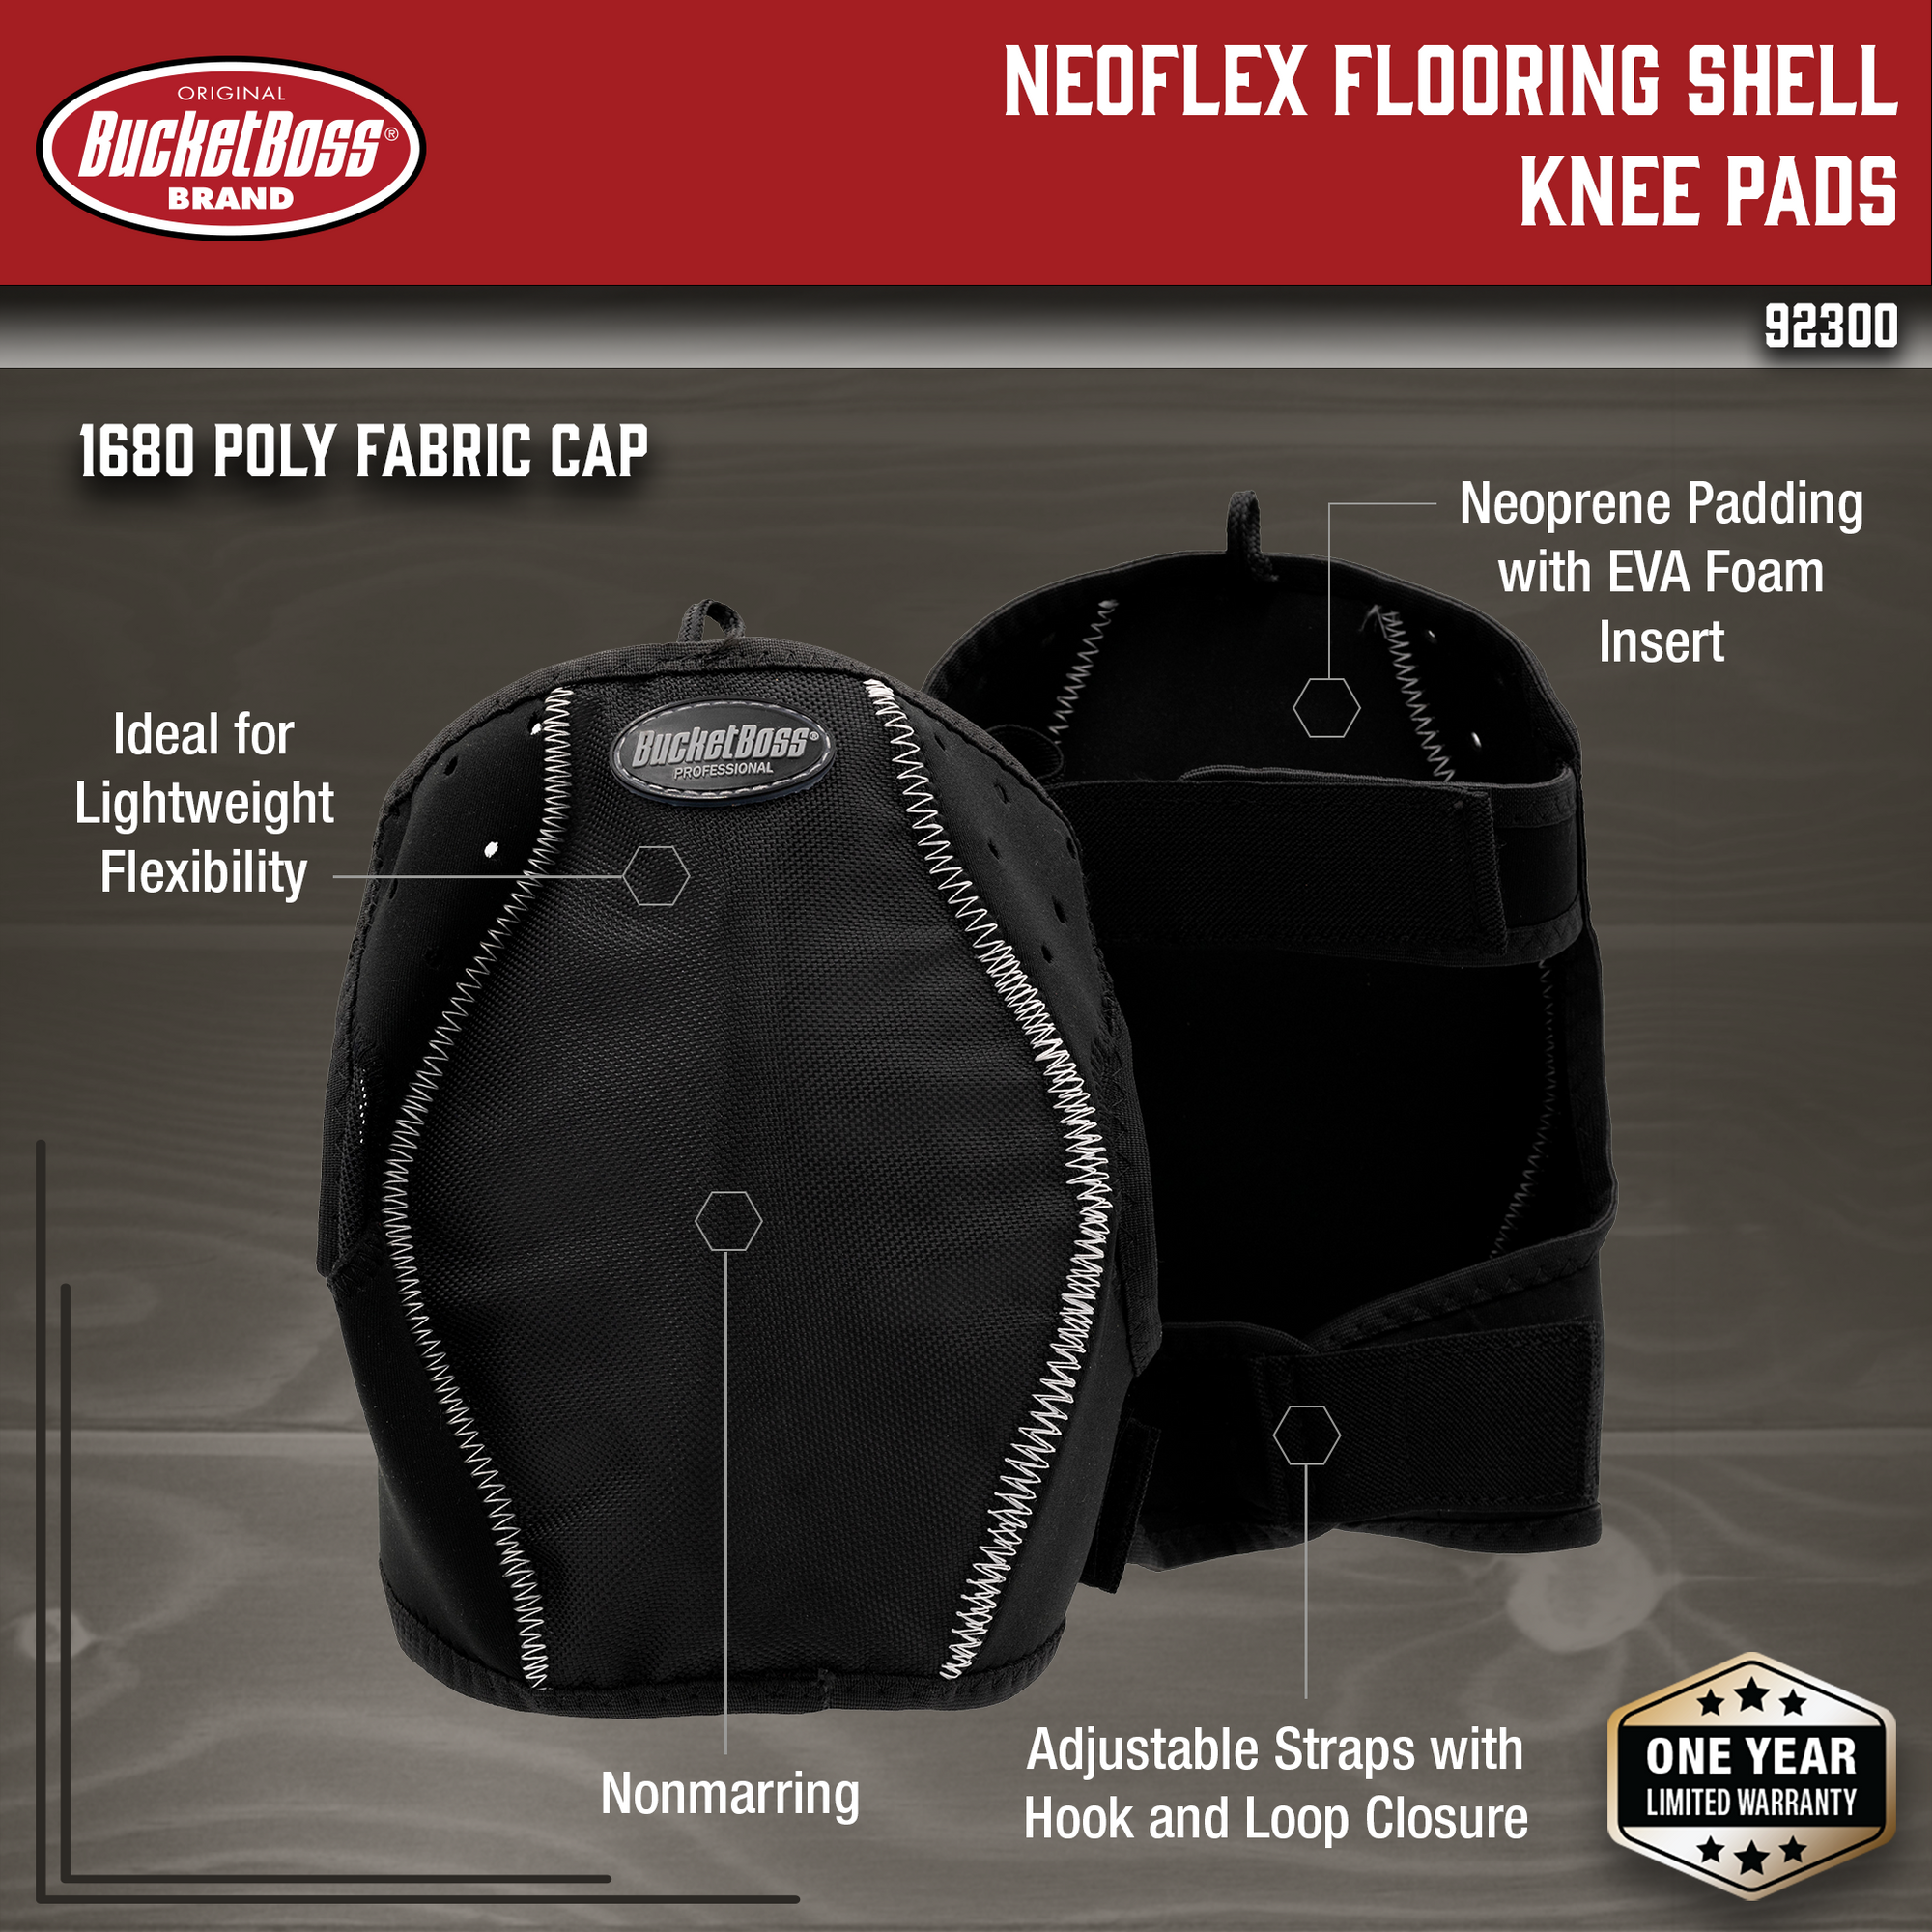 NeoFlex Flooring Shell Knee Pads